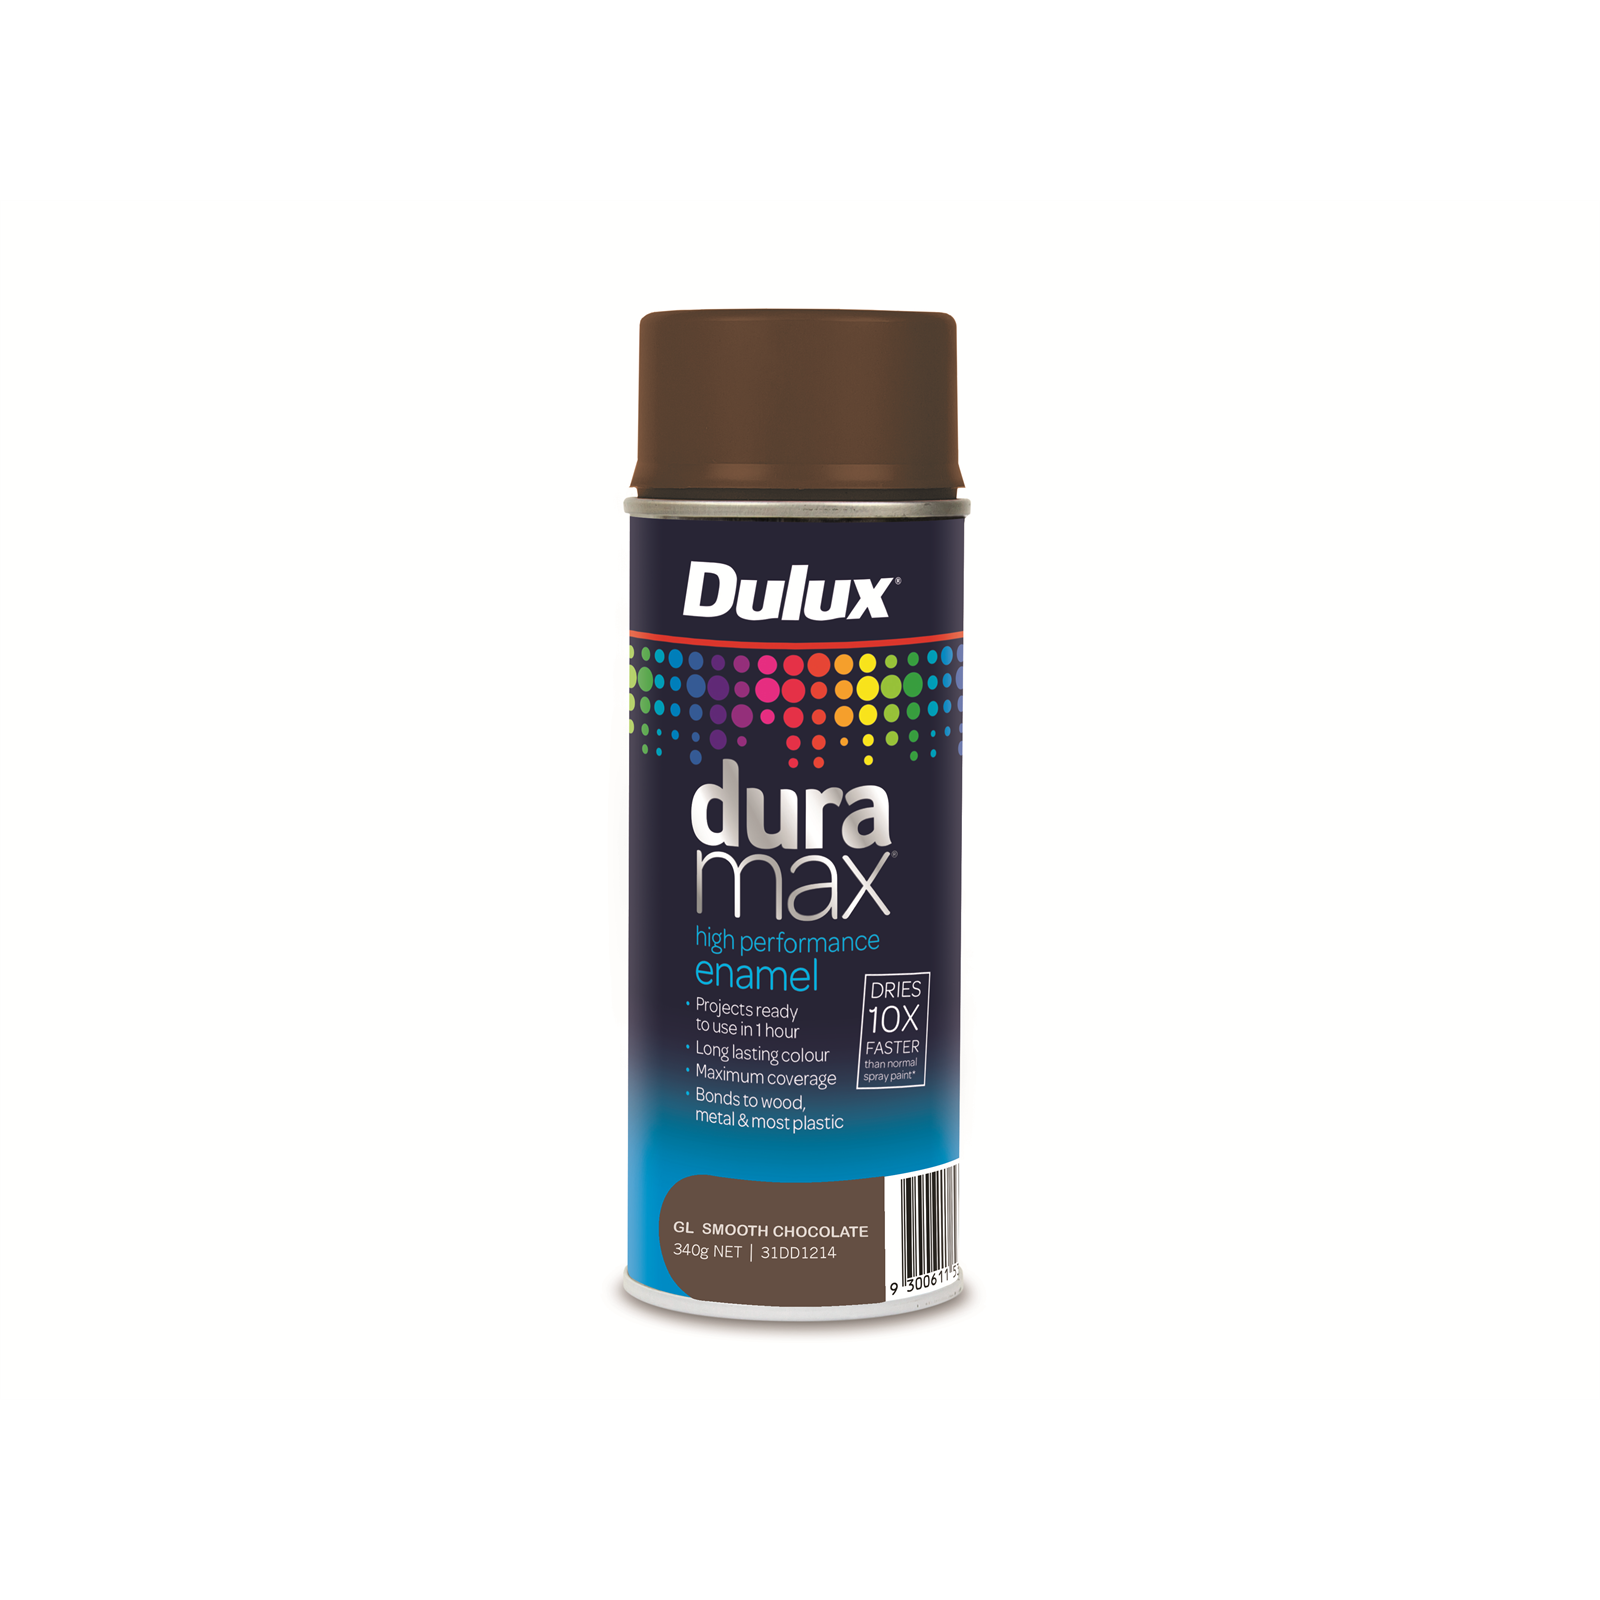 Dulux Duramax 340g Gloss Smooth Chocolate Spray Paint